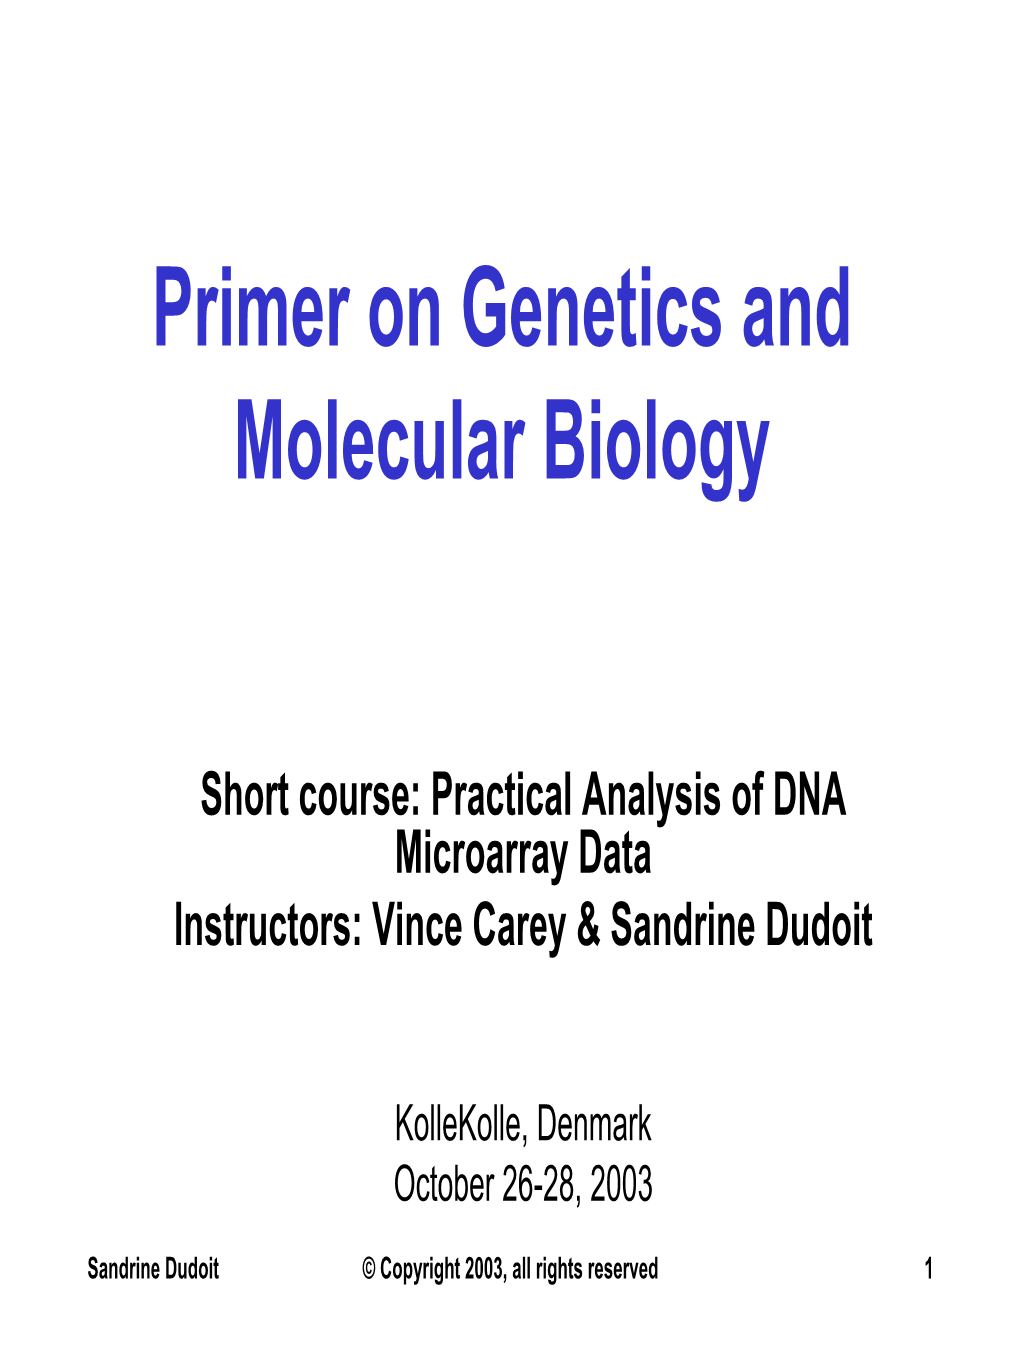 Primer on Genetics and Molecular Biology